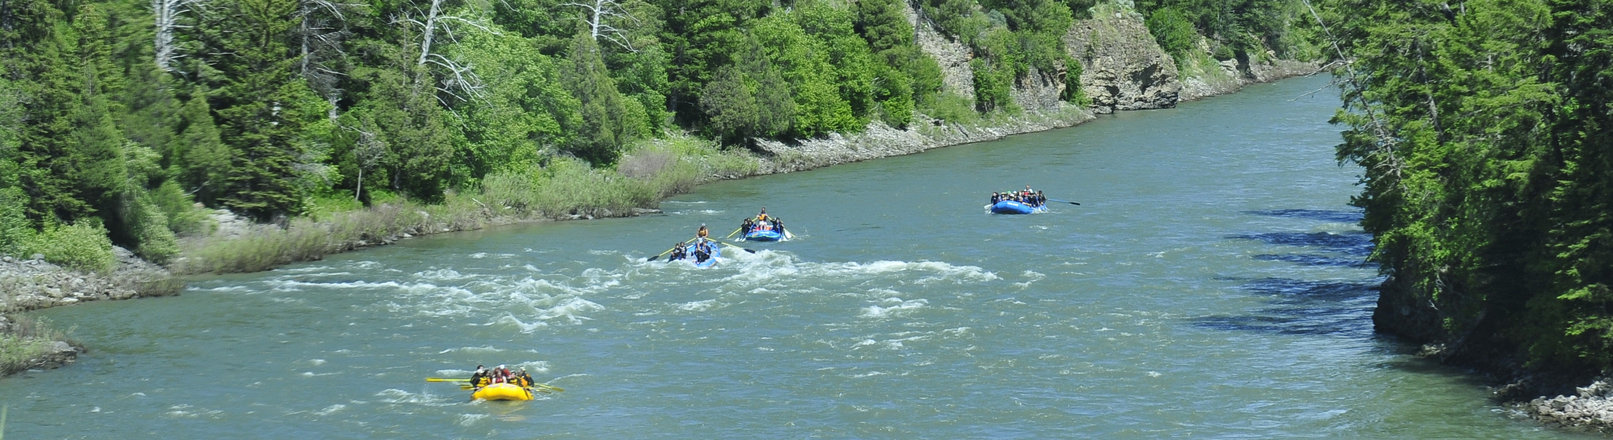 Rafting on Snake River